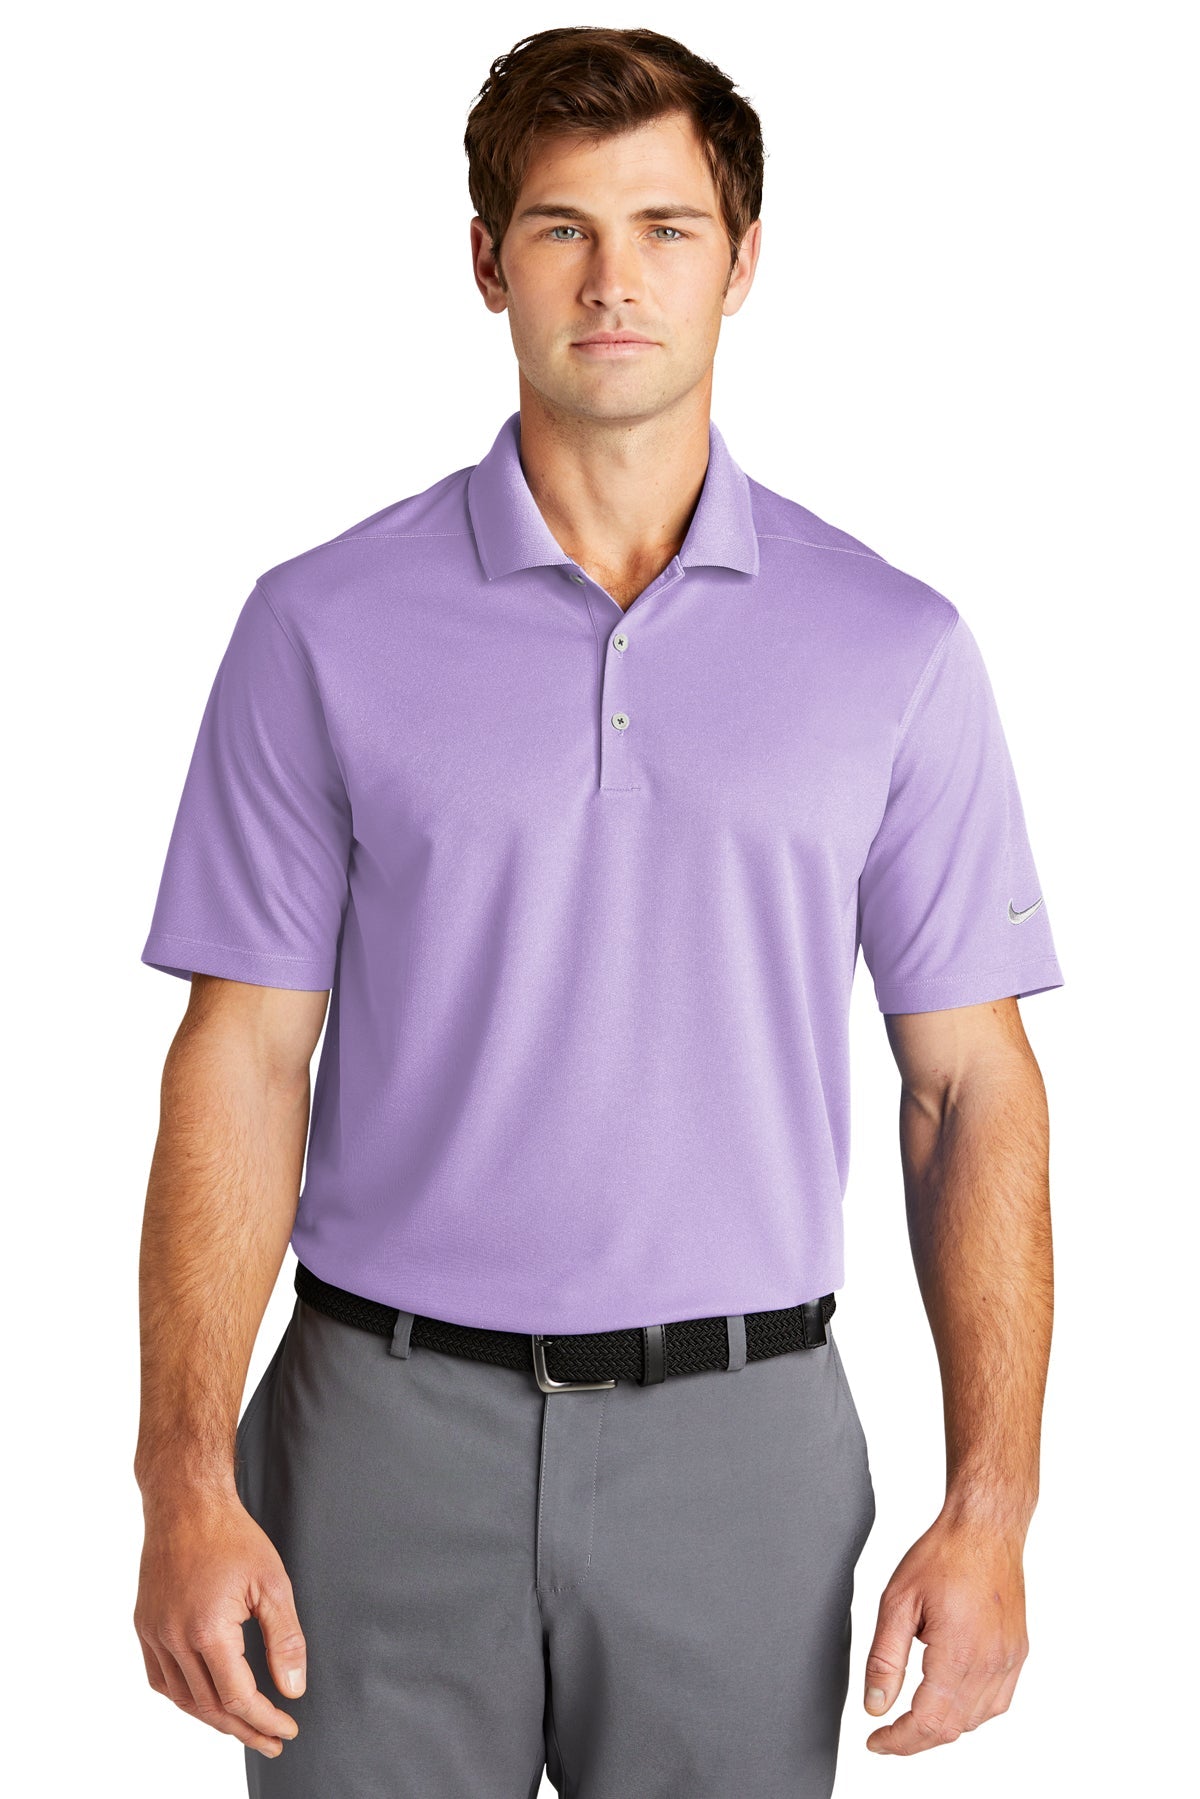 mens purple nike shirt